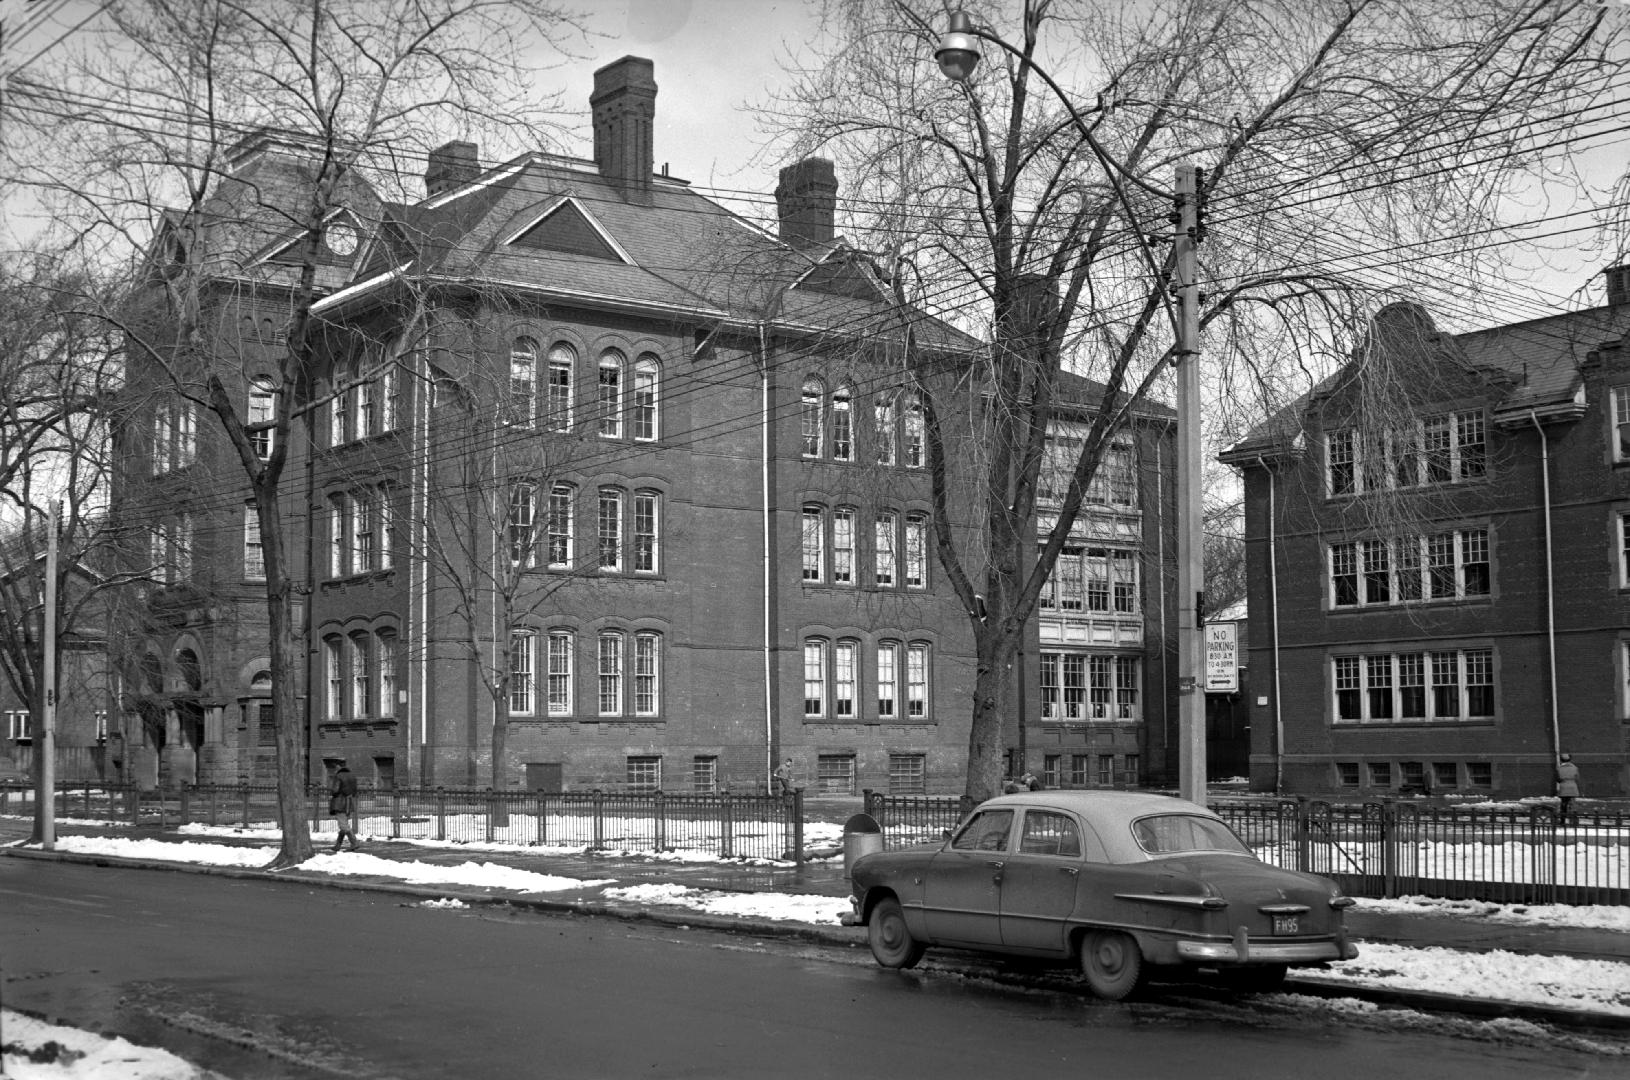 Huron St. Public School, Huron St., east side, between Lowther & Bernard Aves